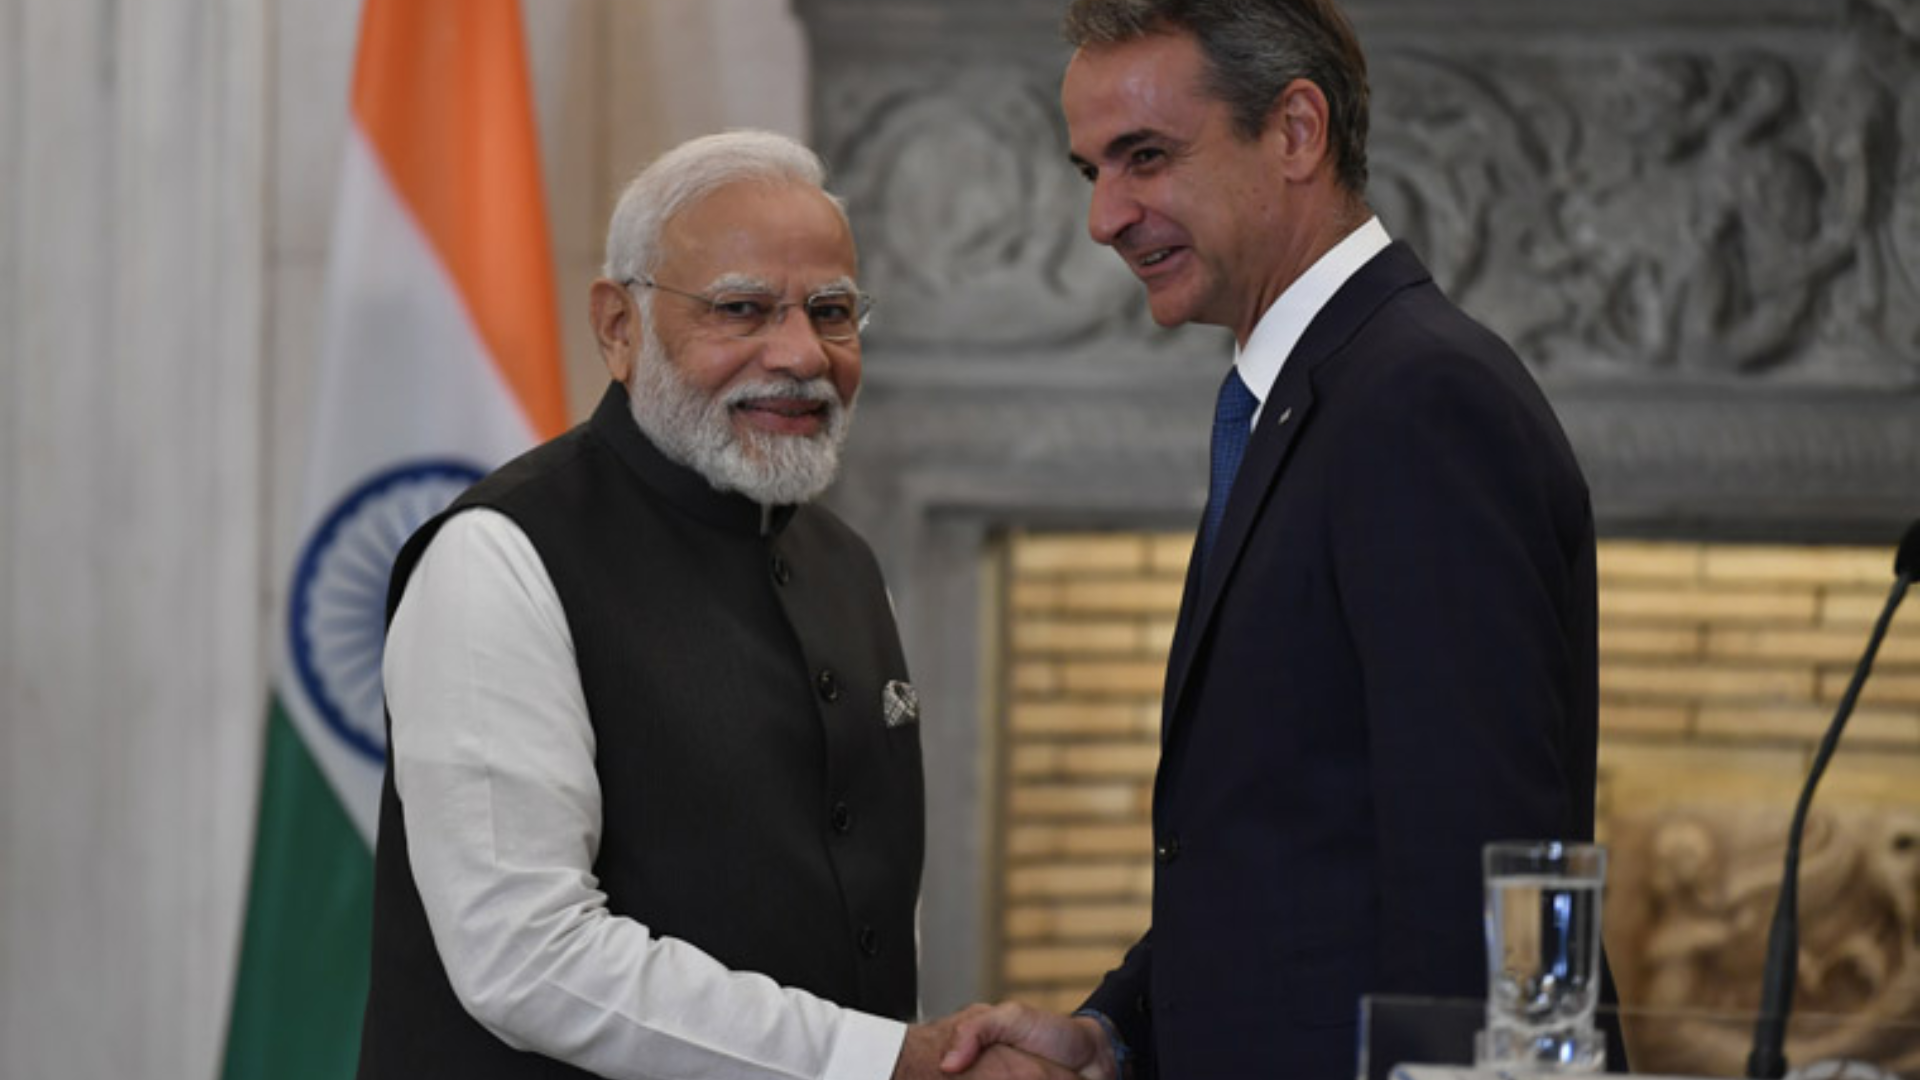 PM Modi: India, Greece Aim to Double Trade by 2030